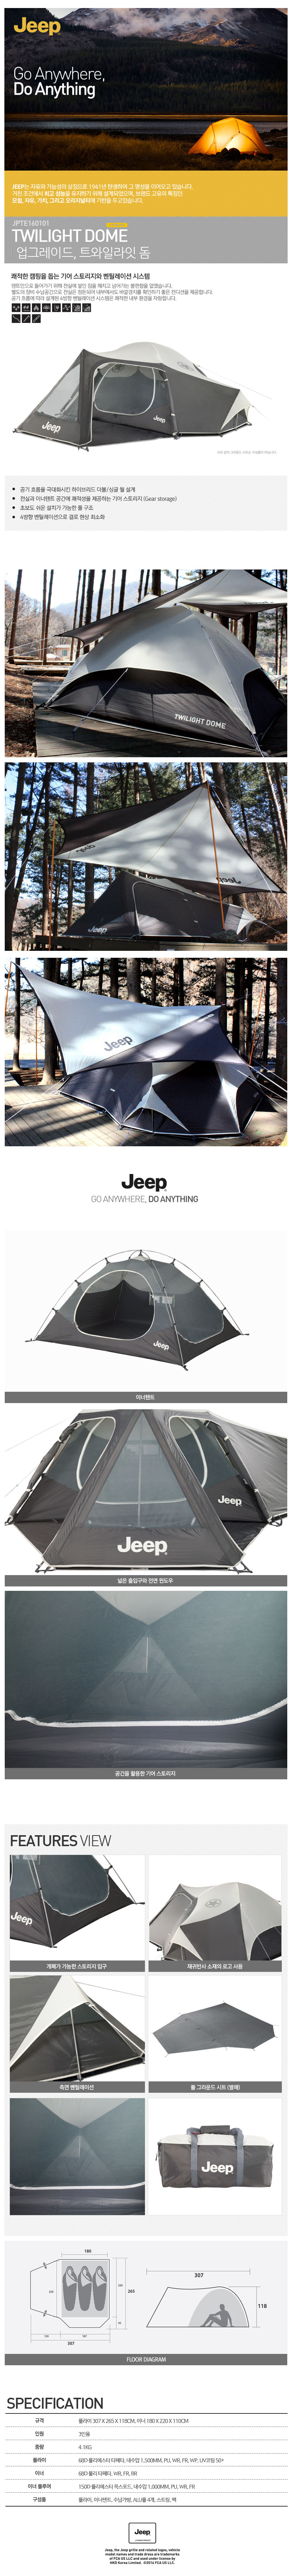 twilight_dome.jpg : 자전거캠핑에 적합한 JEEP 트와일라잇돔 텐트 -145,000원